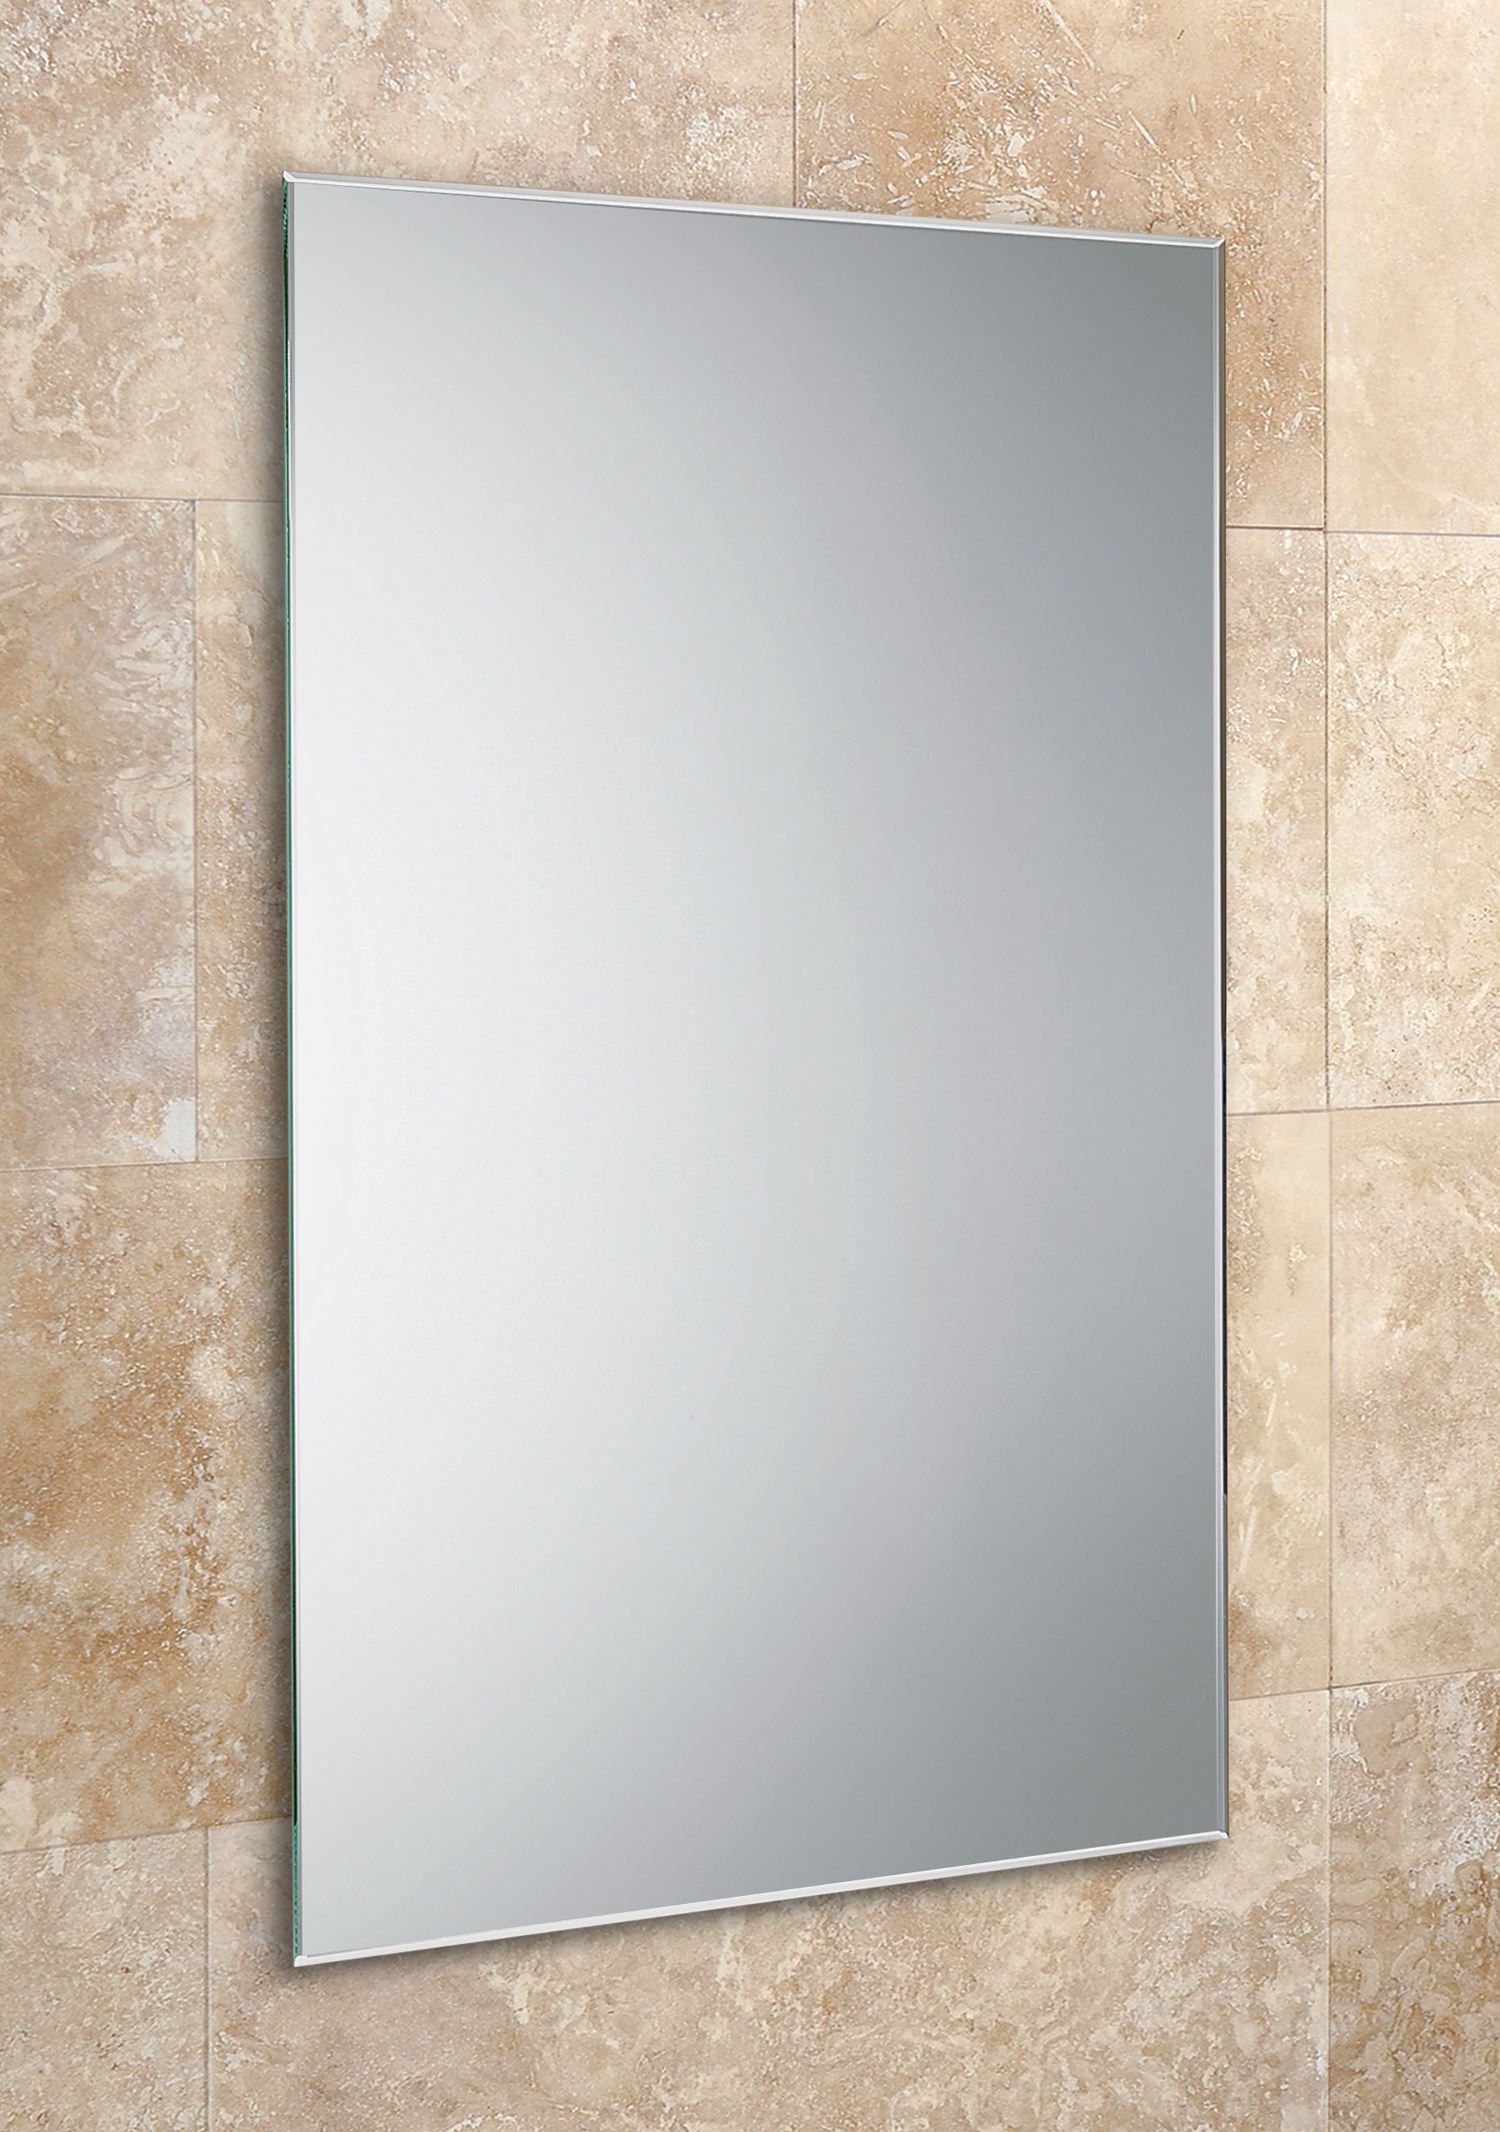 Hib Johnson Rectangular Mirror With Bevelled Edges 400 X 600mm | 76900000 In Rectangular Chevron Edge Wall Mirrors (View 8 of 15)